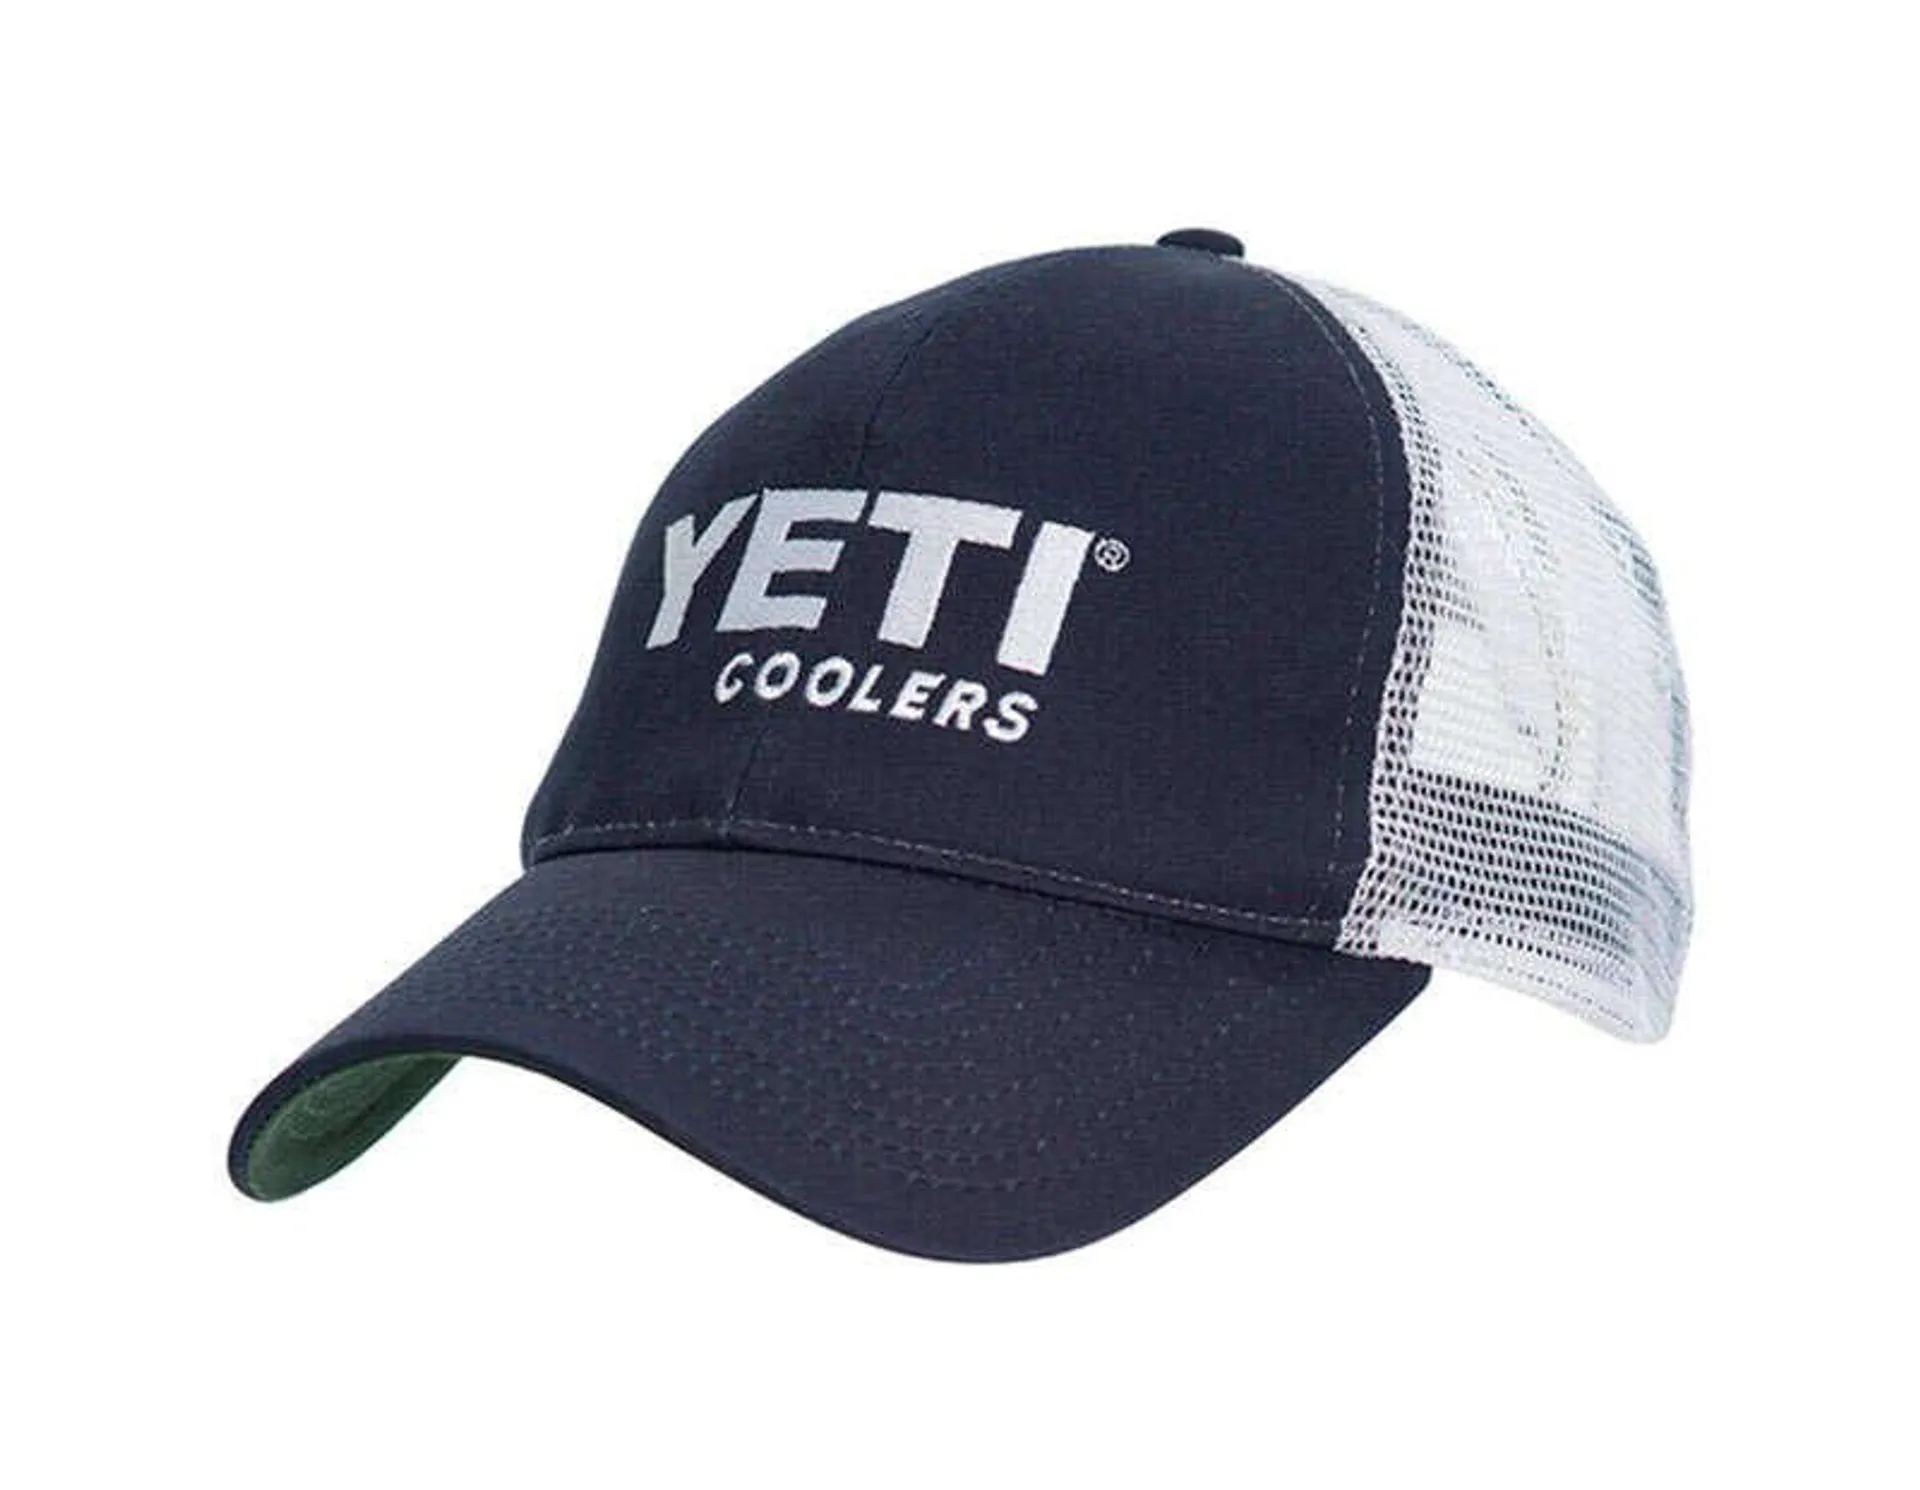 YETI Trucker Hat Navy Blue/White One Size Fits All